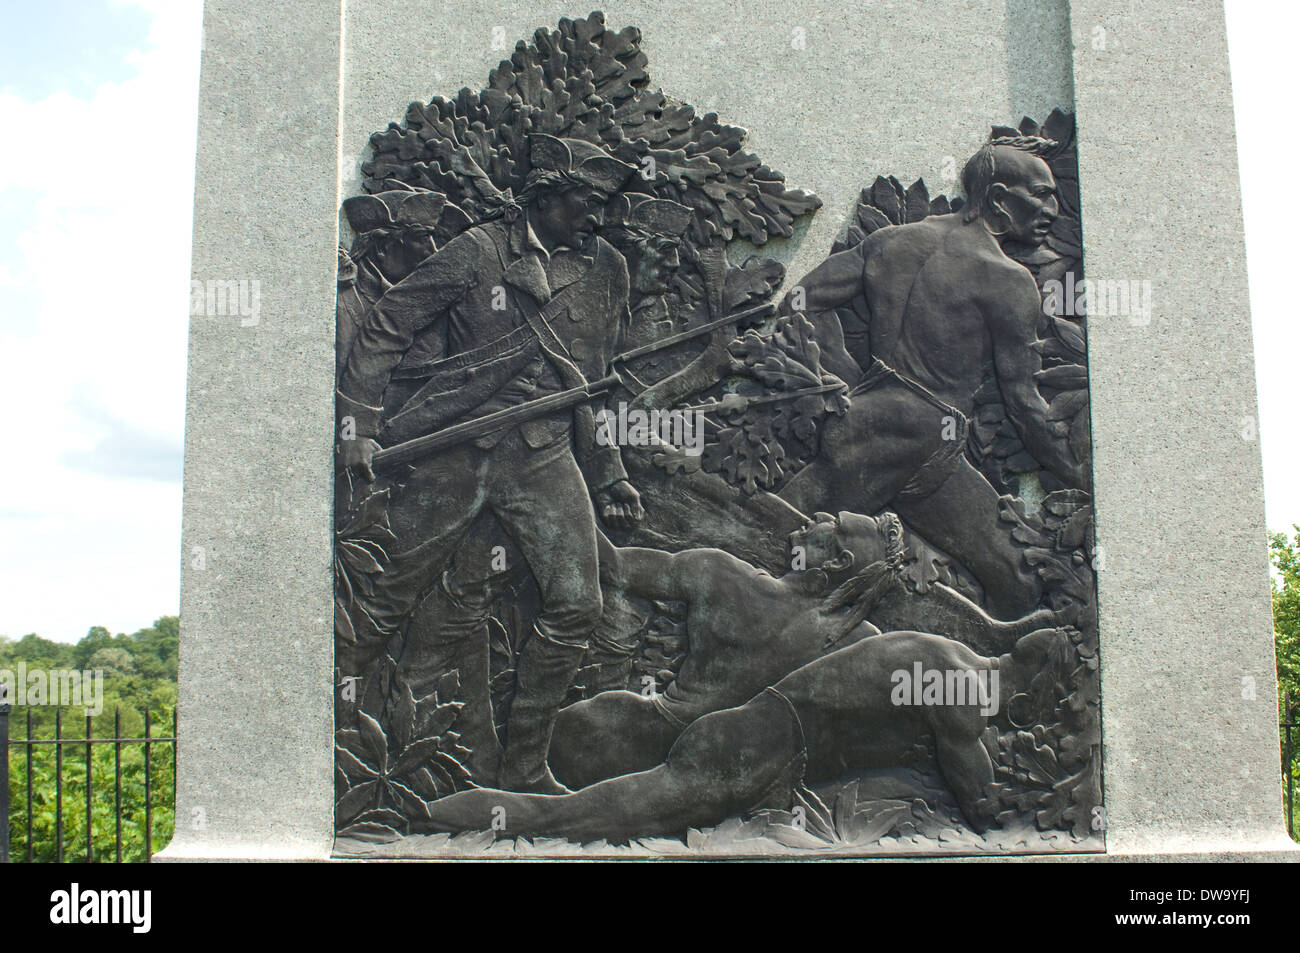 Battle scene, Battle of Fallen Timbers monument, Ohio. Digital photograph Stock Photo